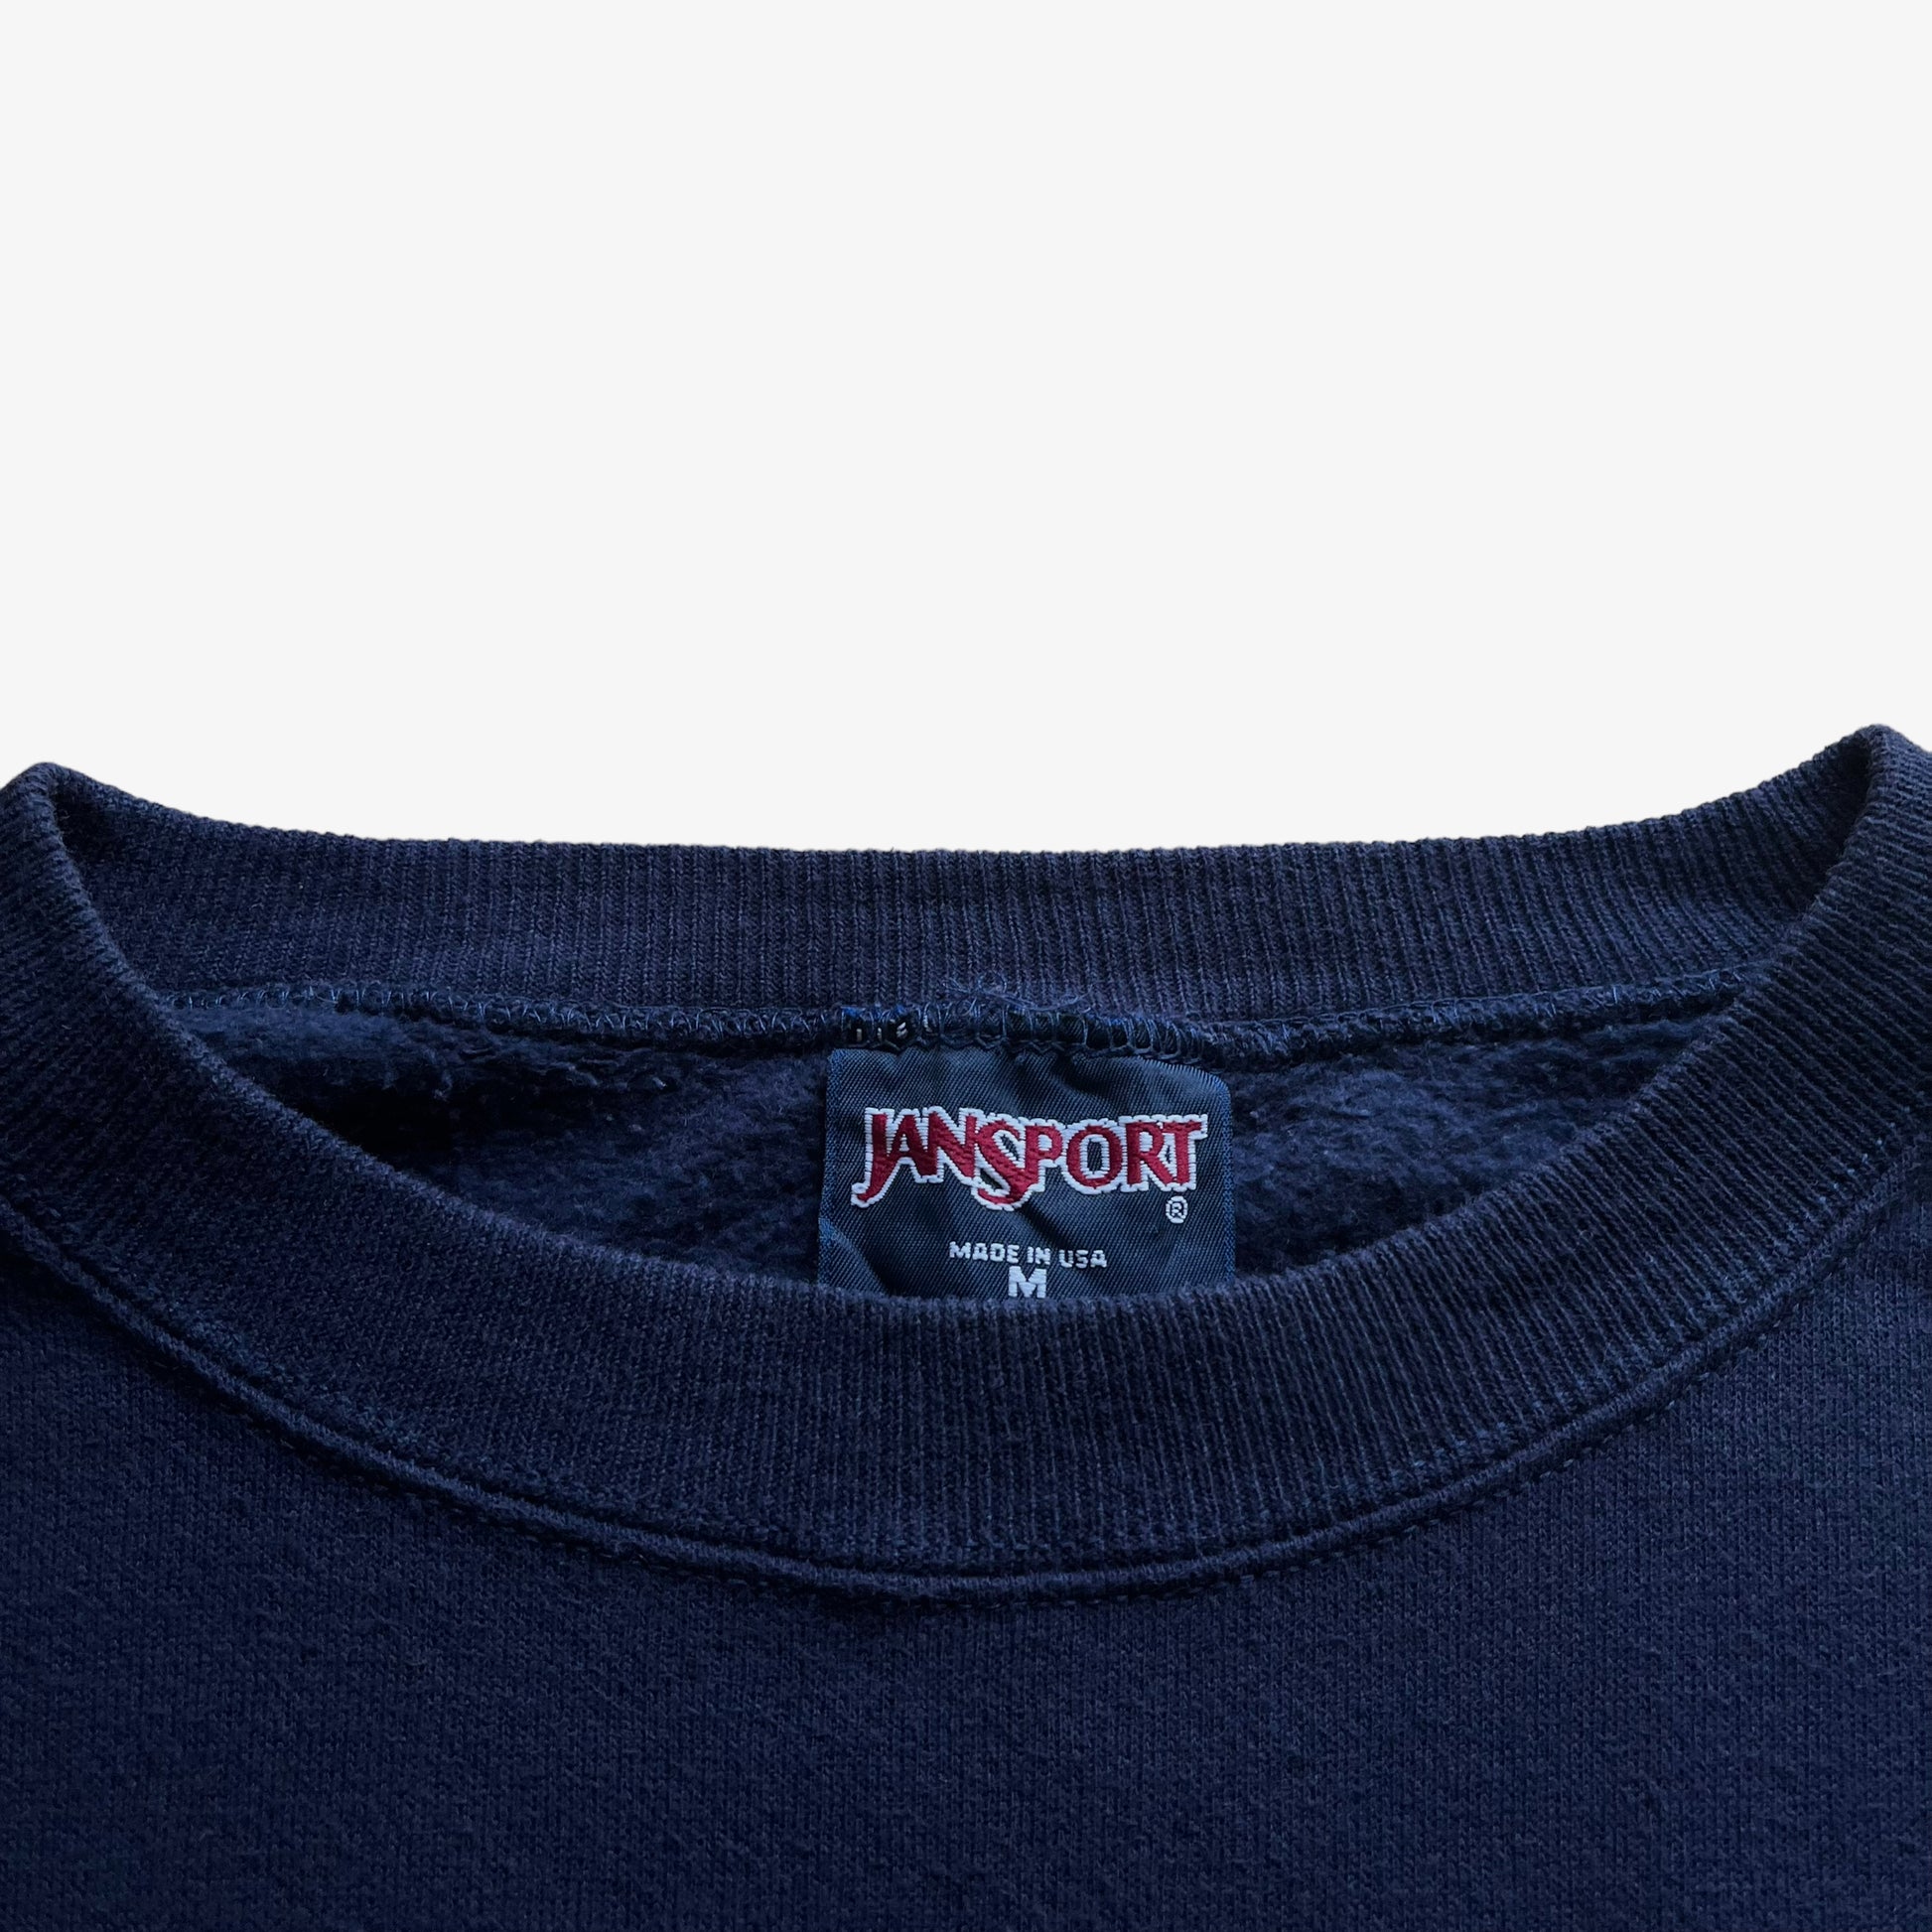 Vintage 90s Womens Jansport University Of California San Diego Sweatshirt Label - Casspios Dream